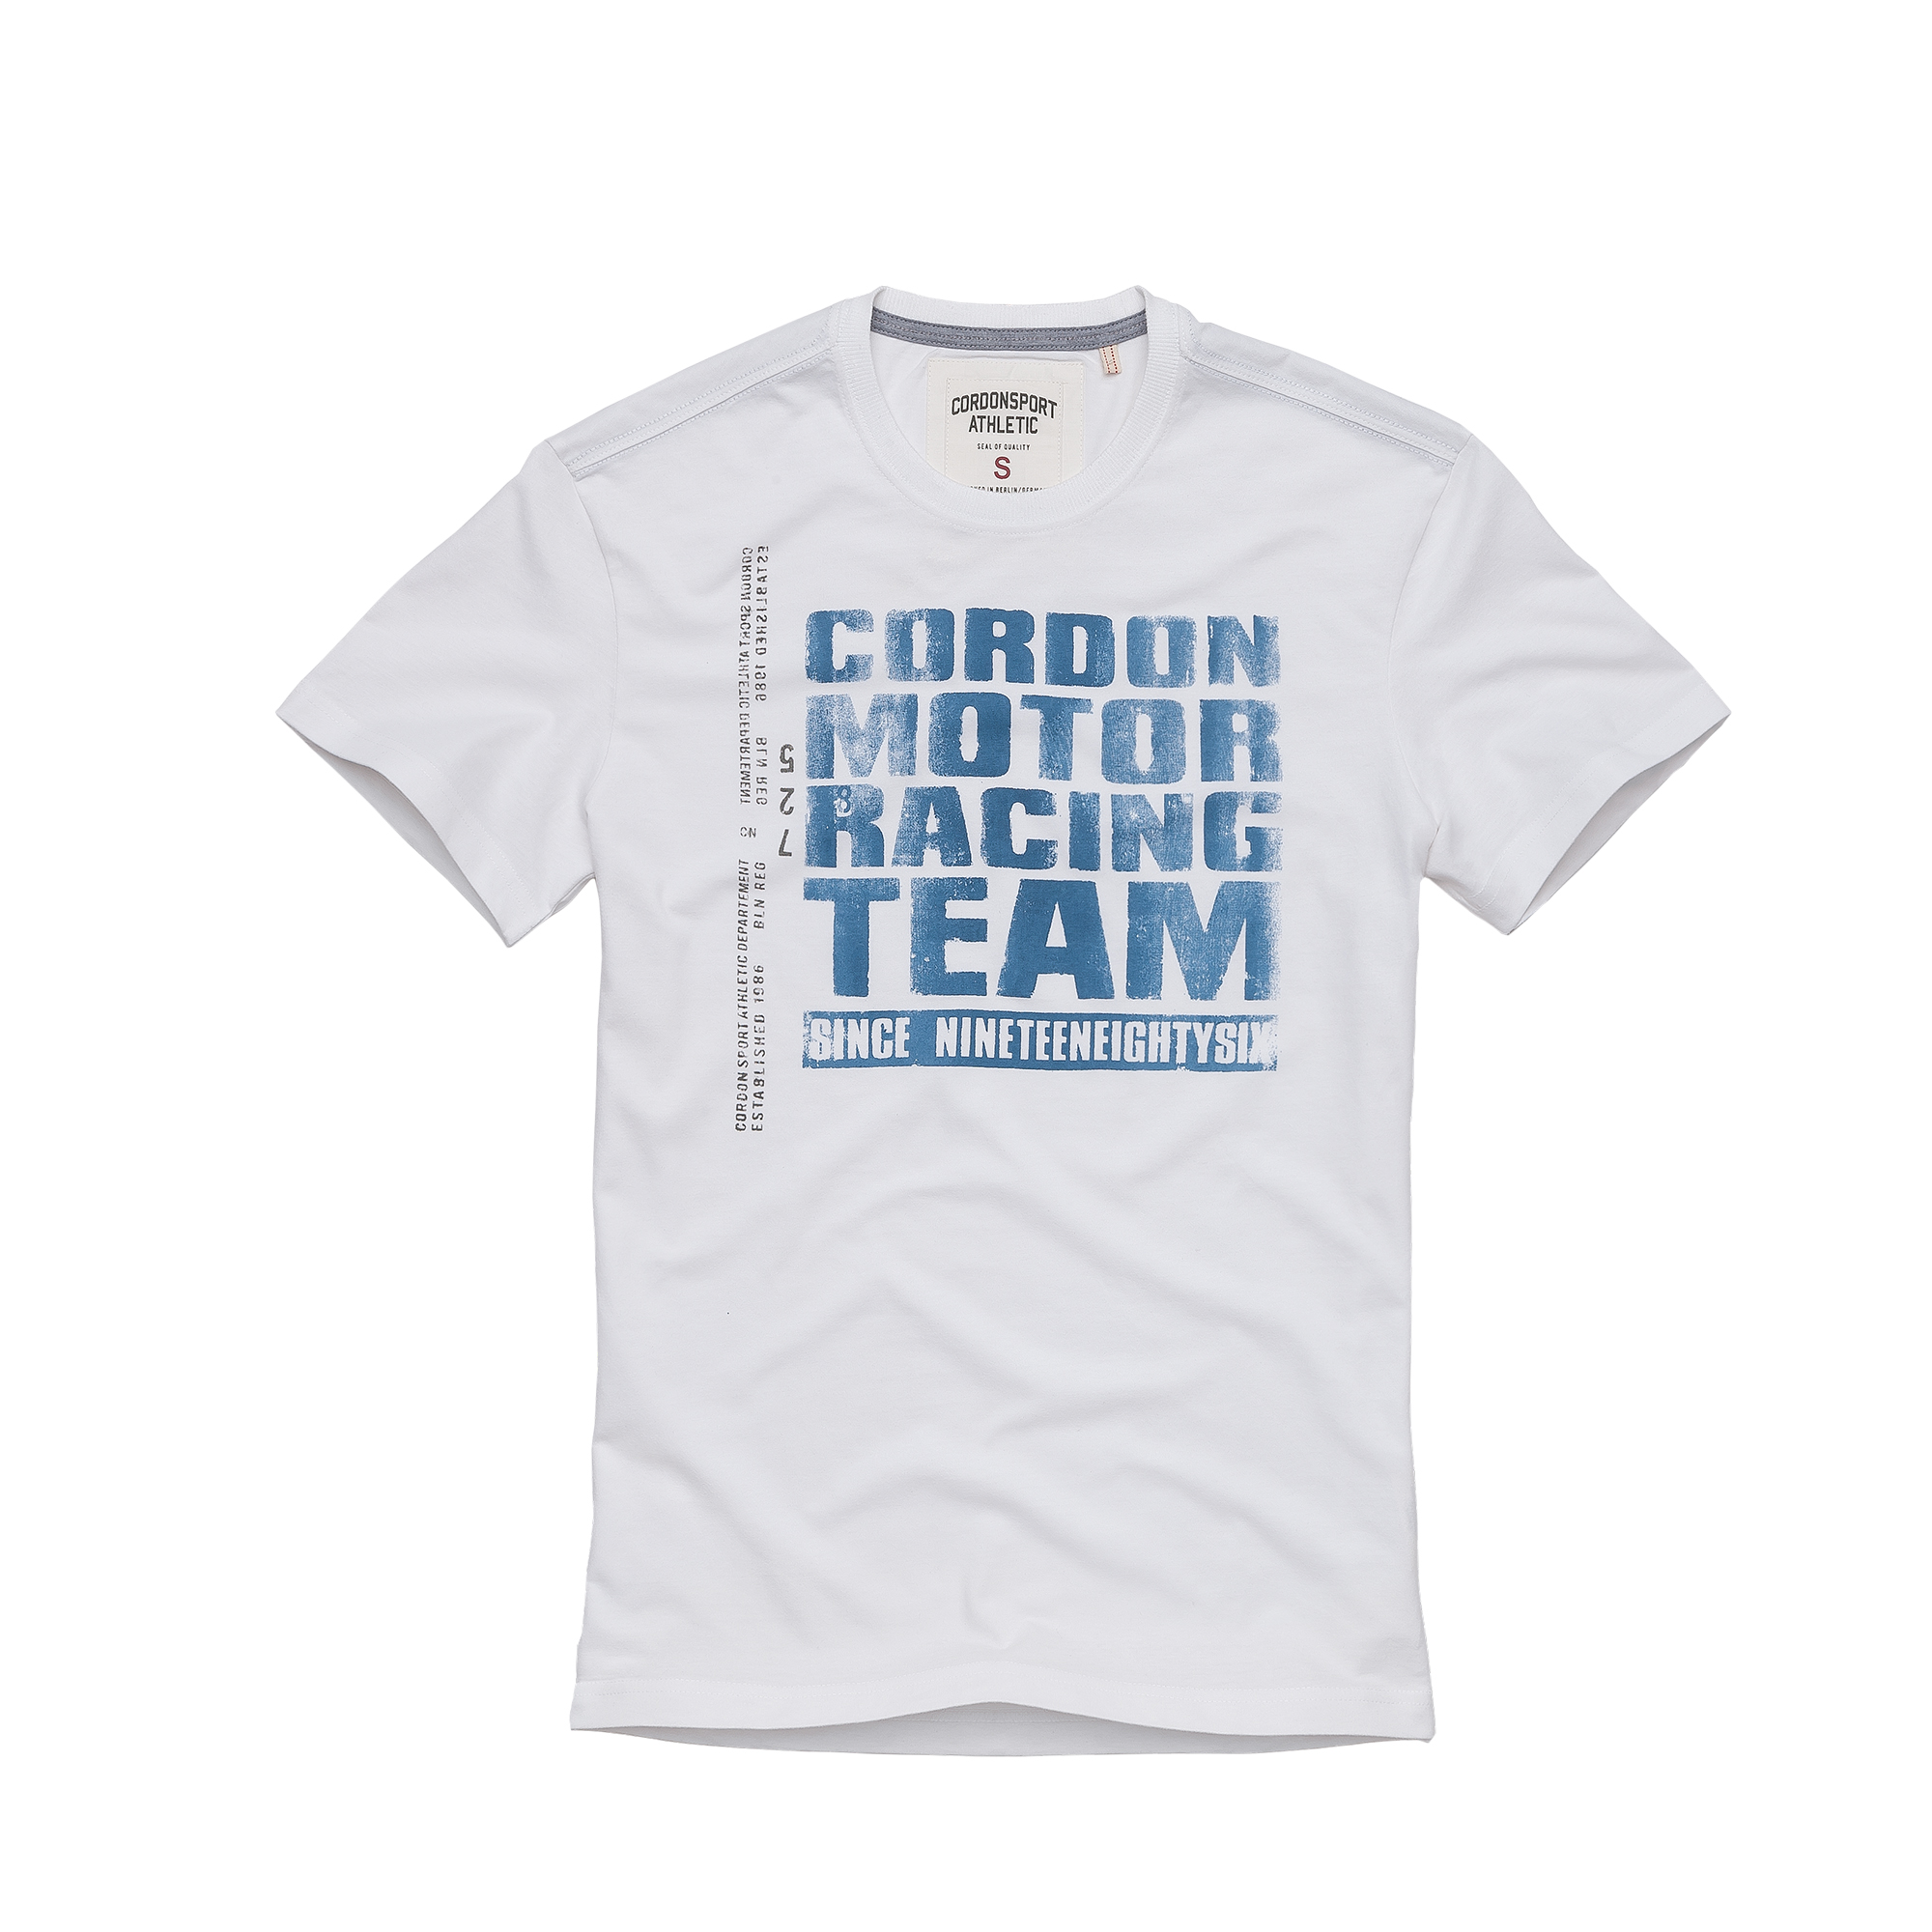 Cordon T-Shirt Racing